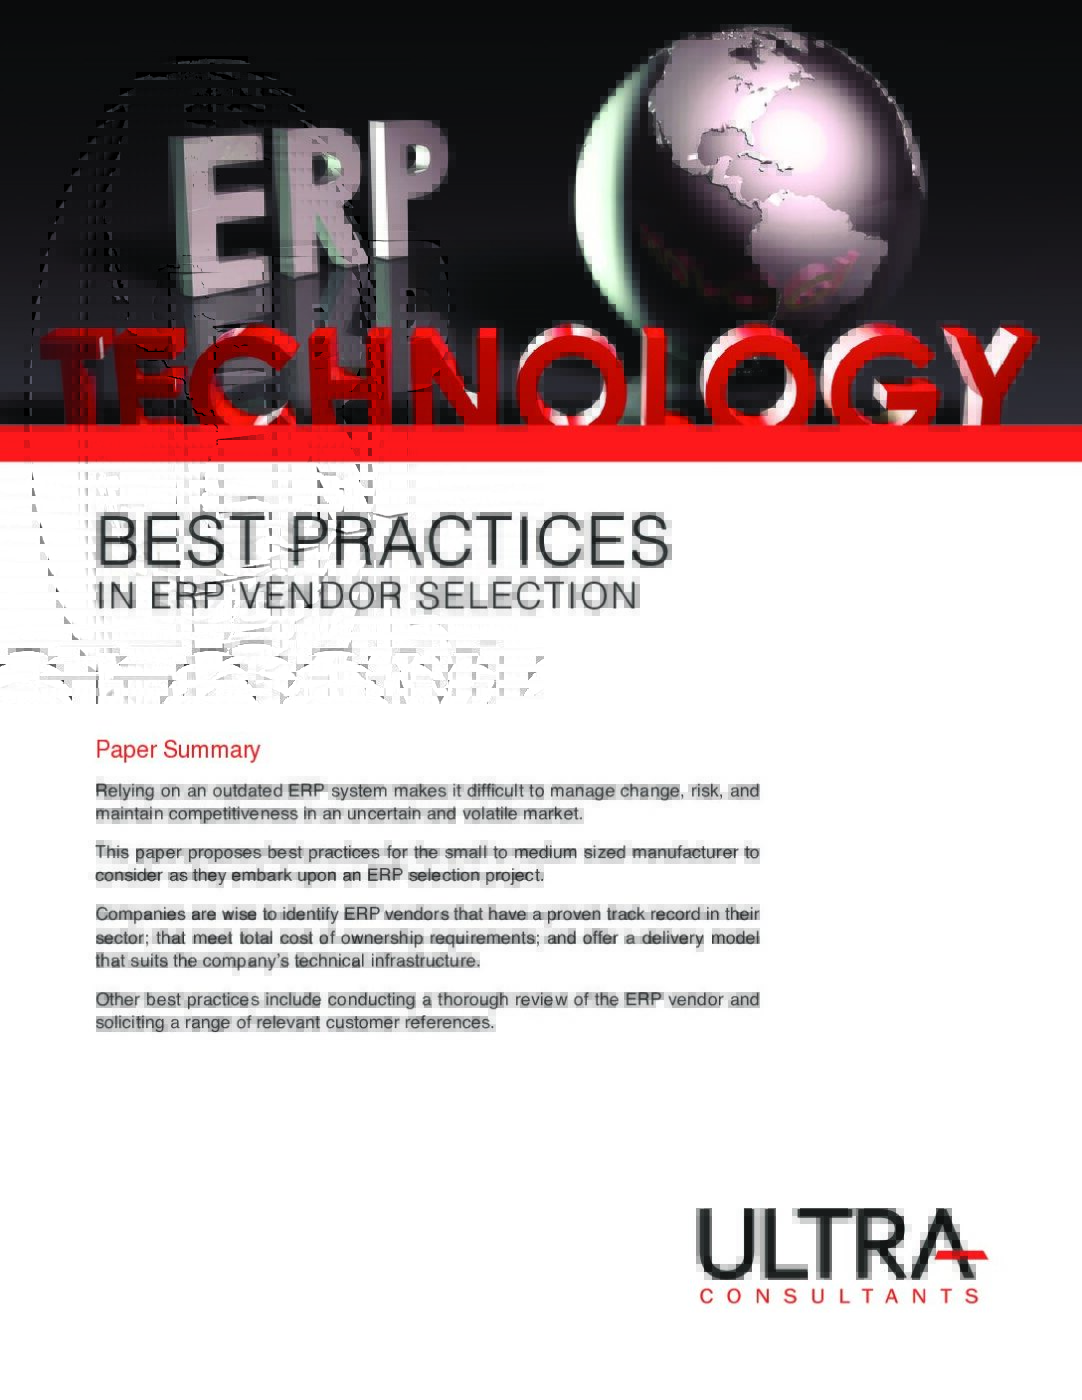 ERP Technology best practices